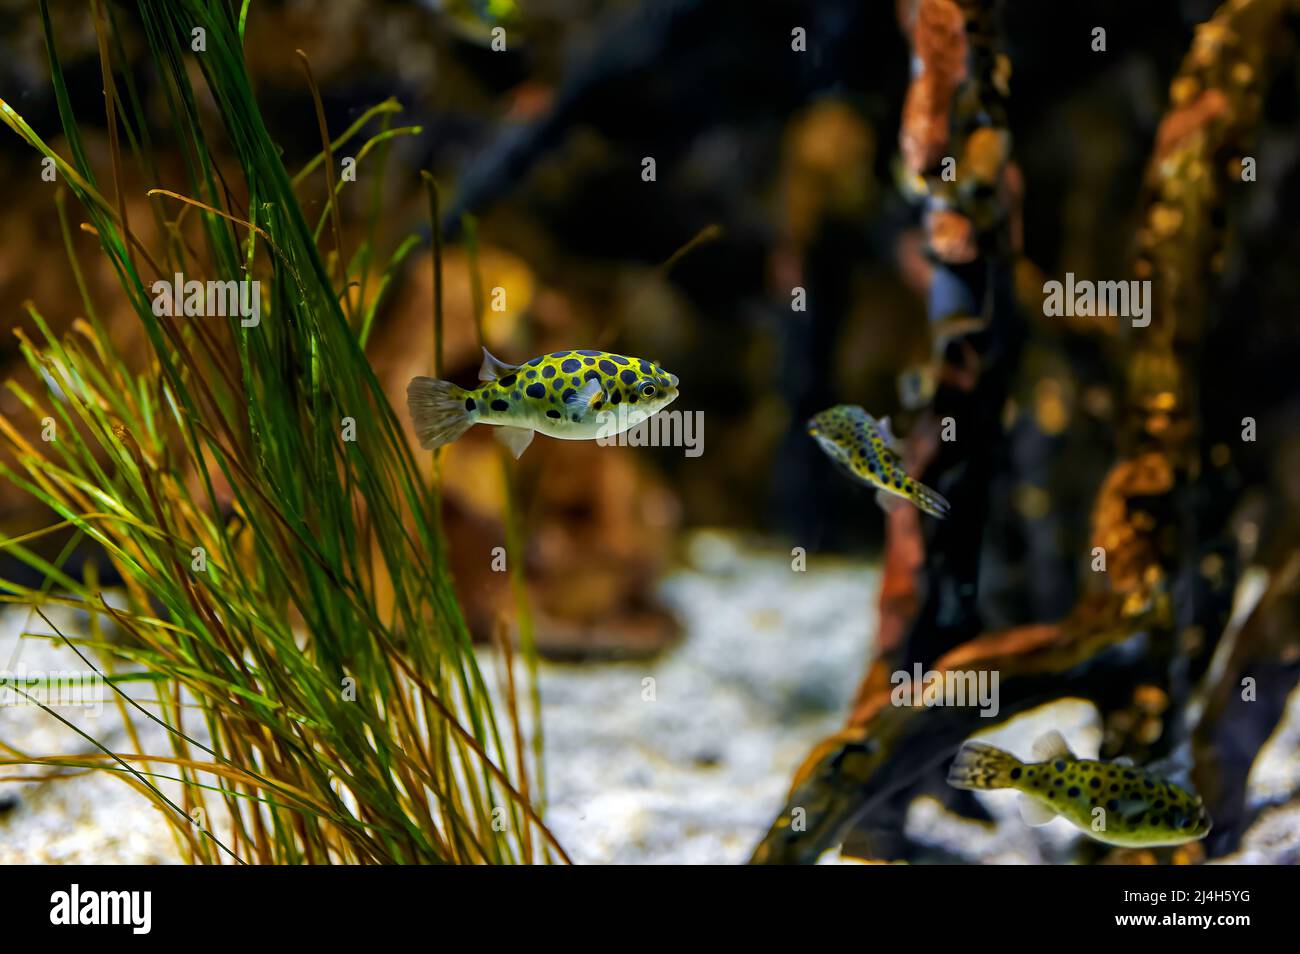 Pez espada verde o pez espada moteado (Dichotomyctere nigroviridis) en un acuario con vegetación marina Foto de stock